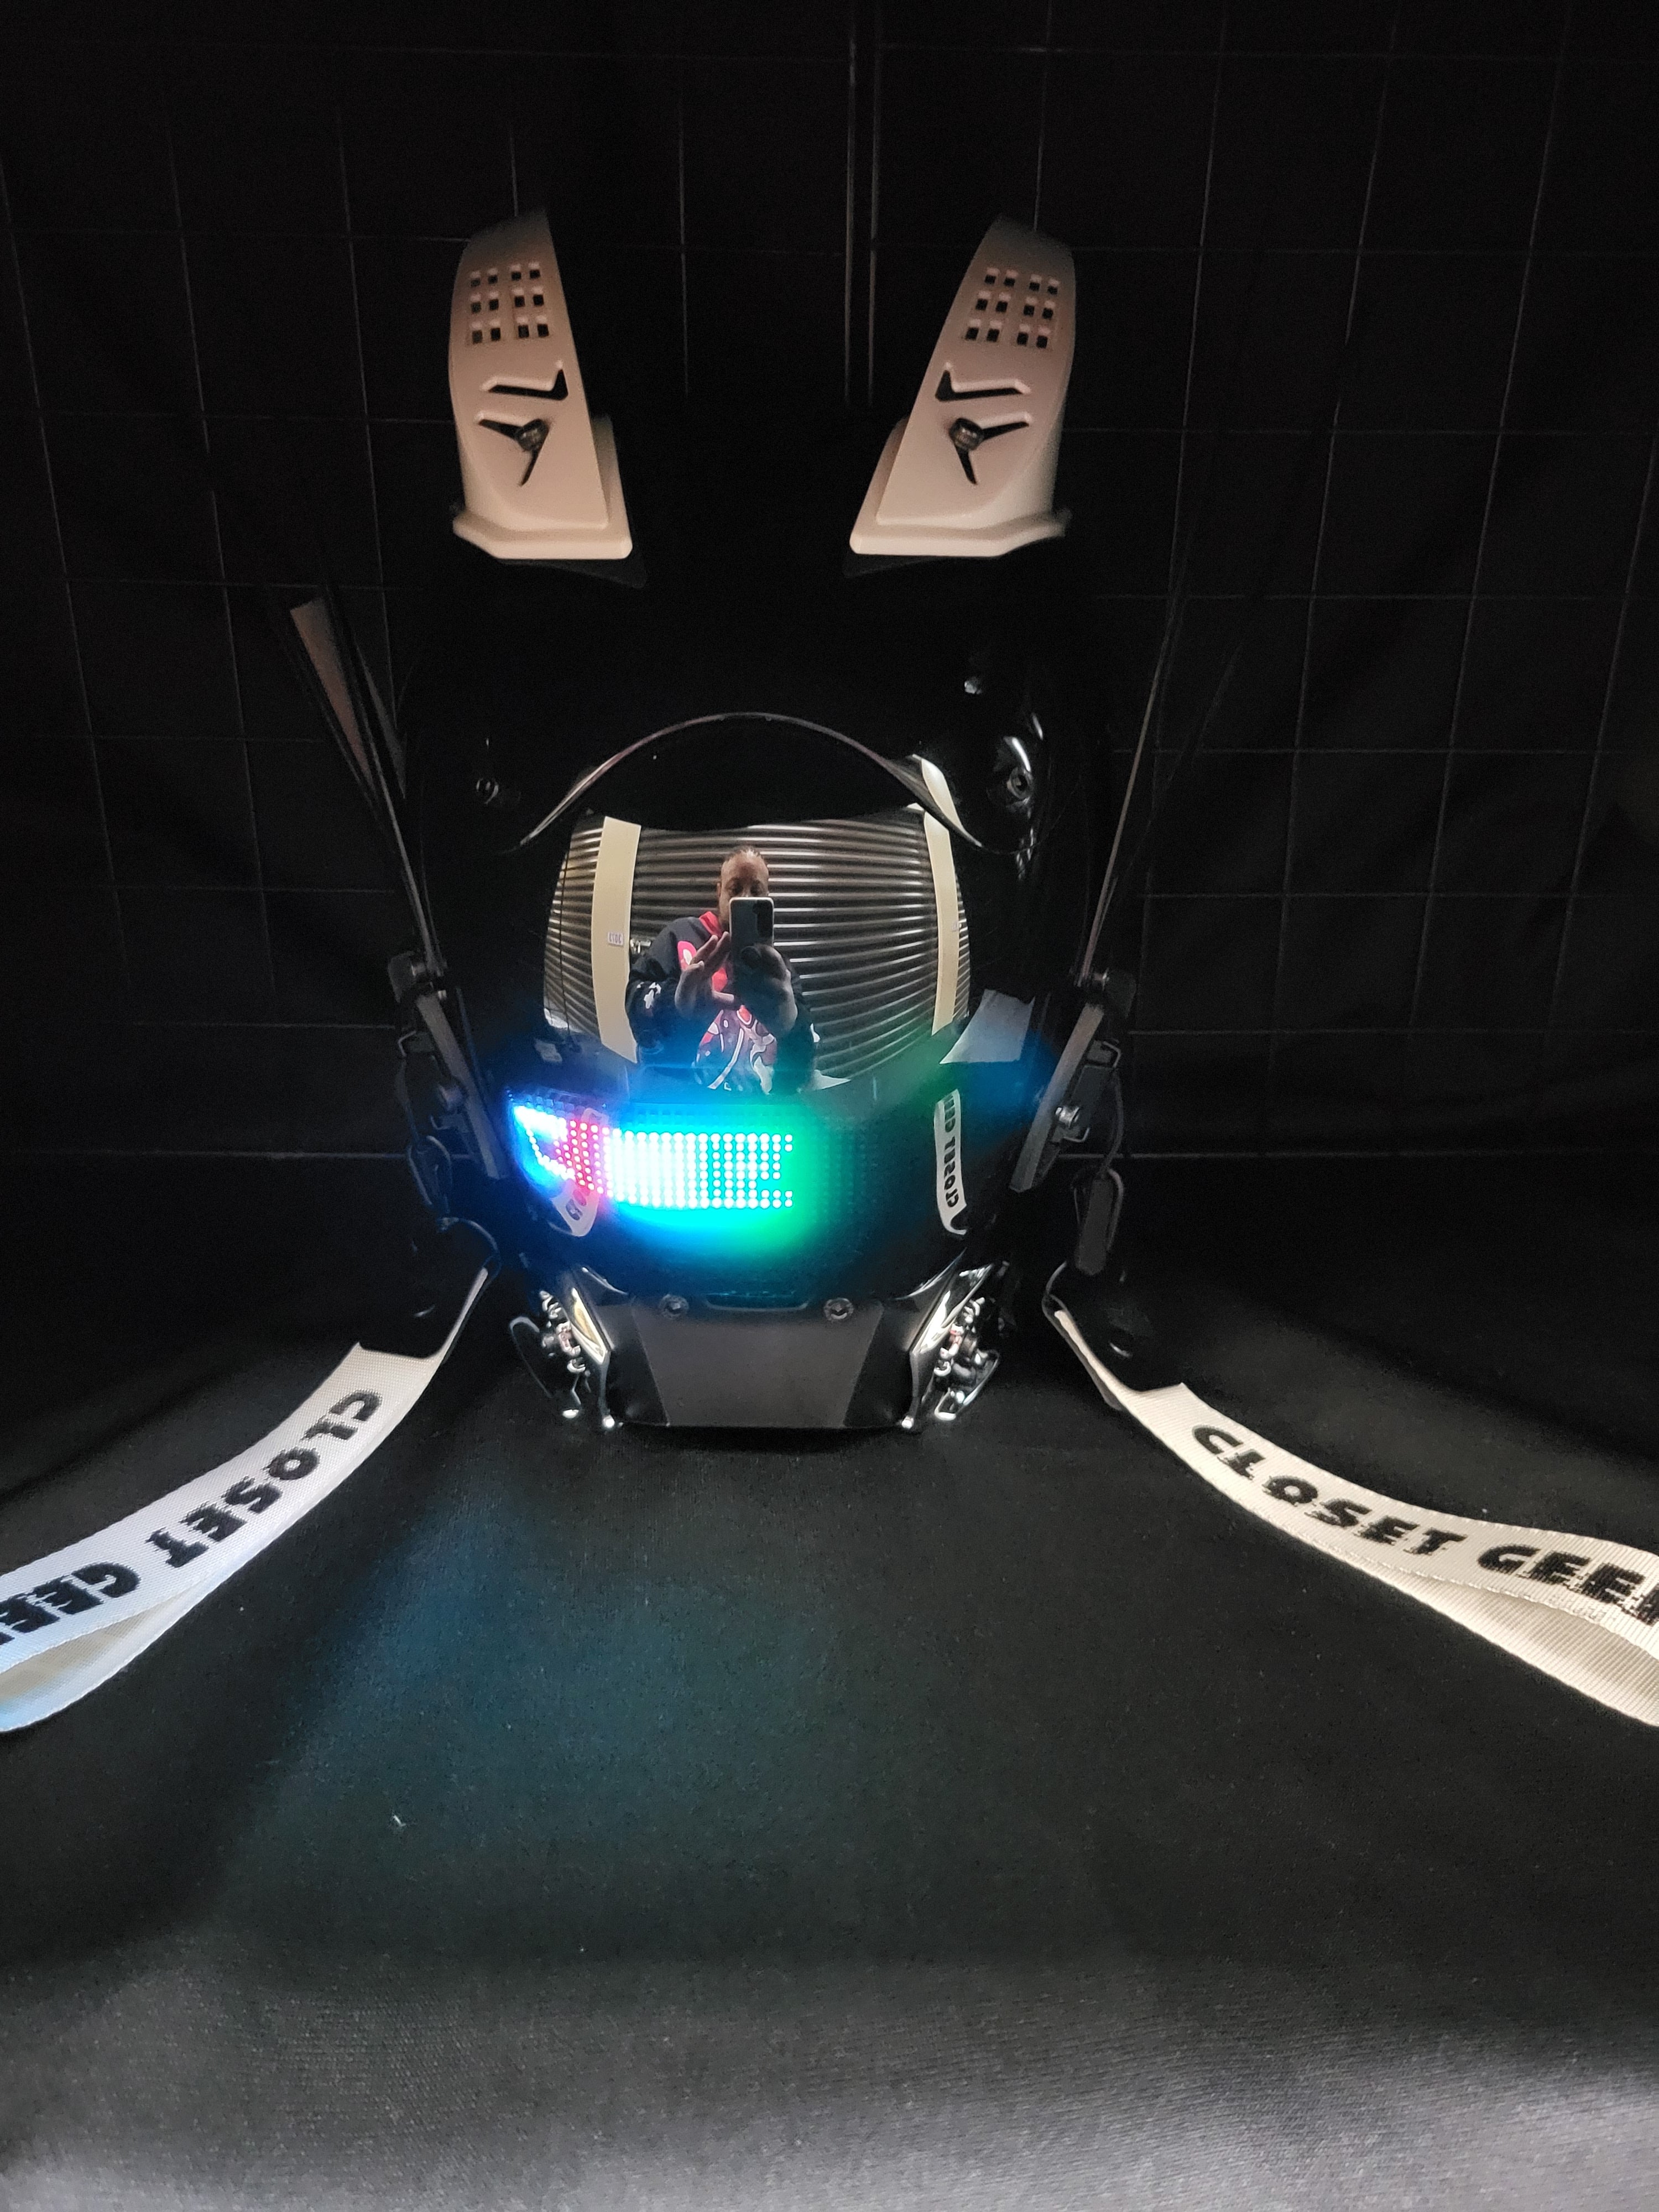 L.e.d programmable cyber helmet with fins